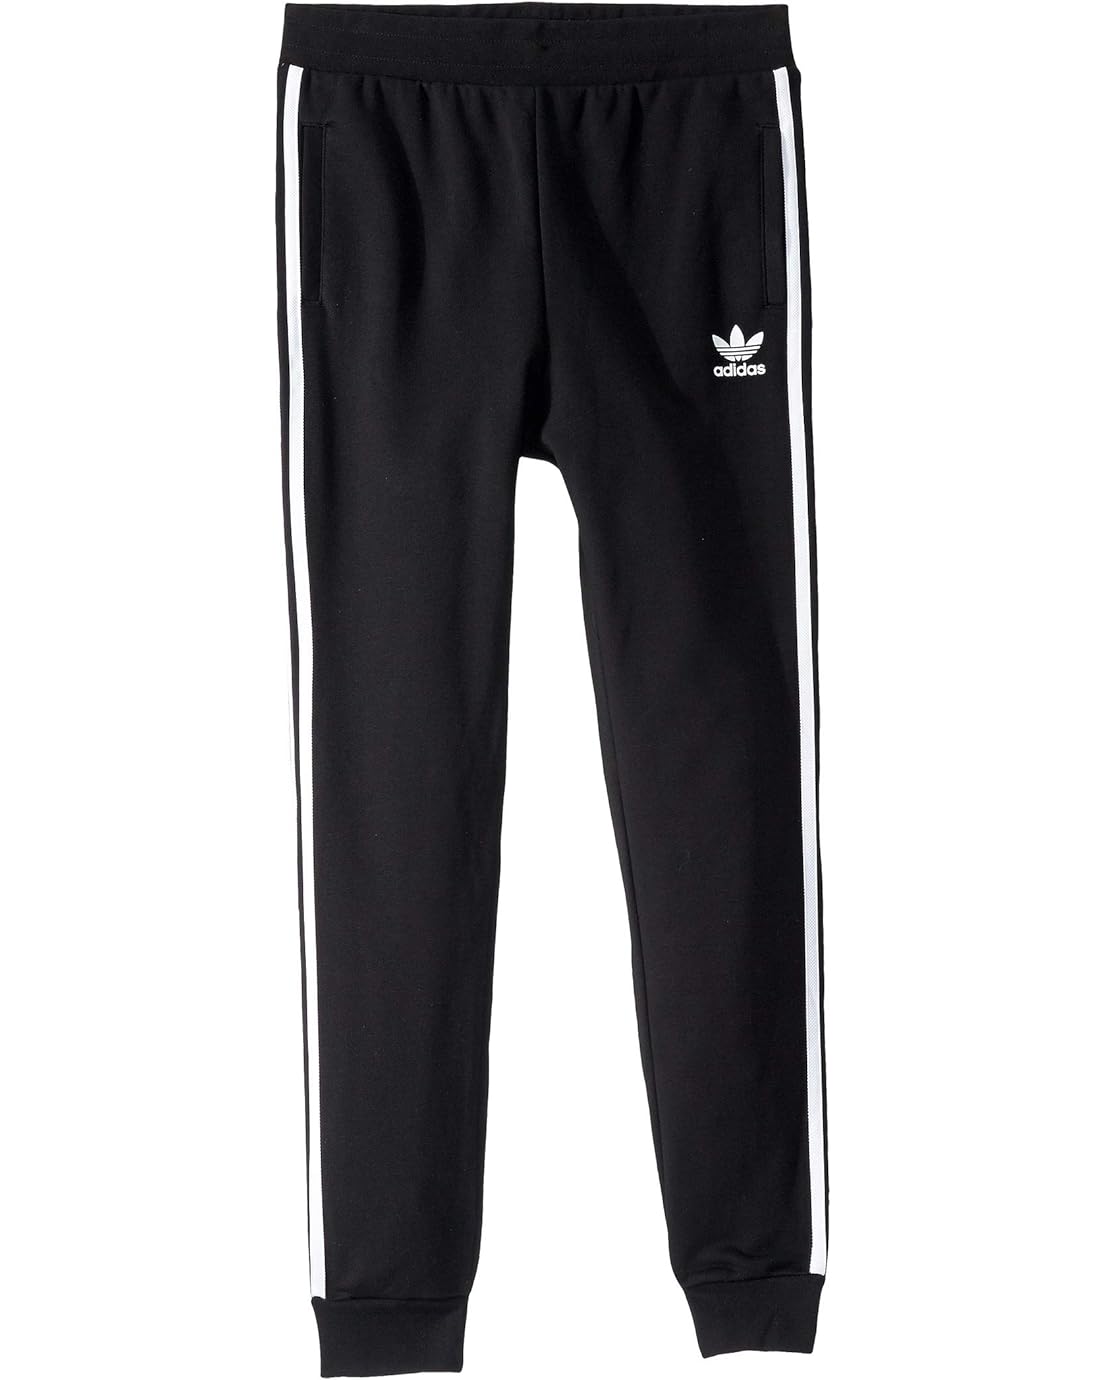 Adidas Originals Kids Trefoil Pants (Little Kids/Big Kids)